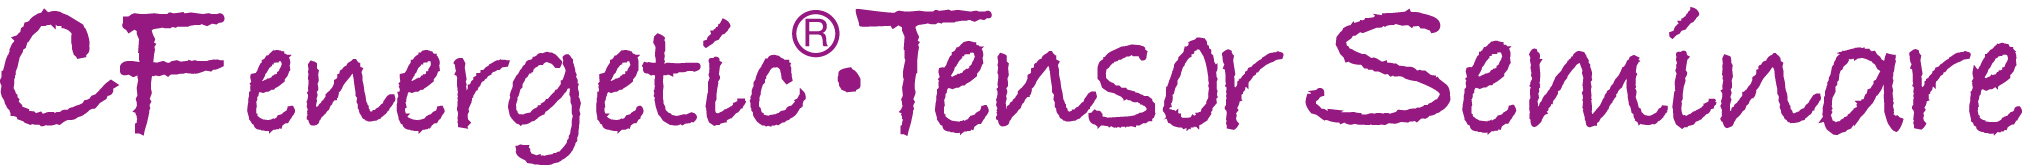 Logo cf ernergetic Tensorseminare Kopie